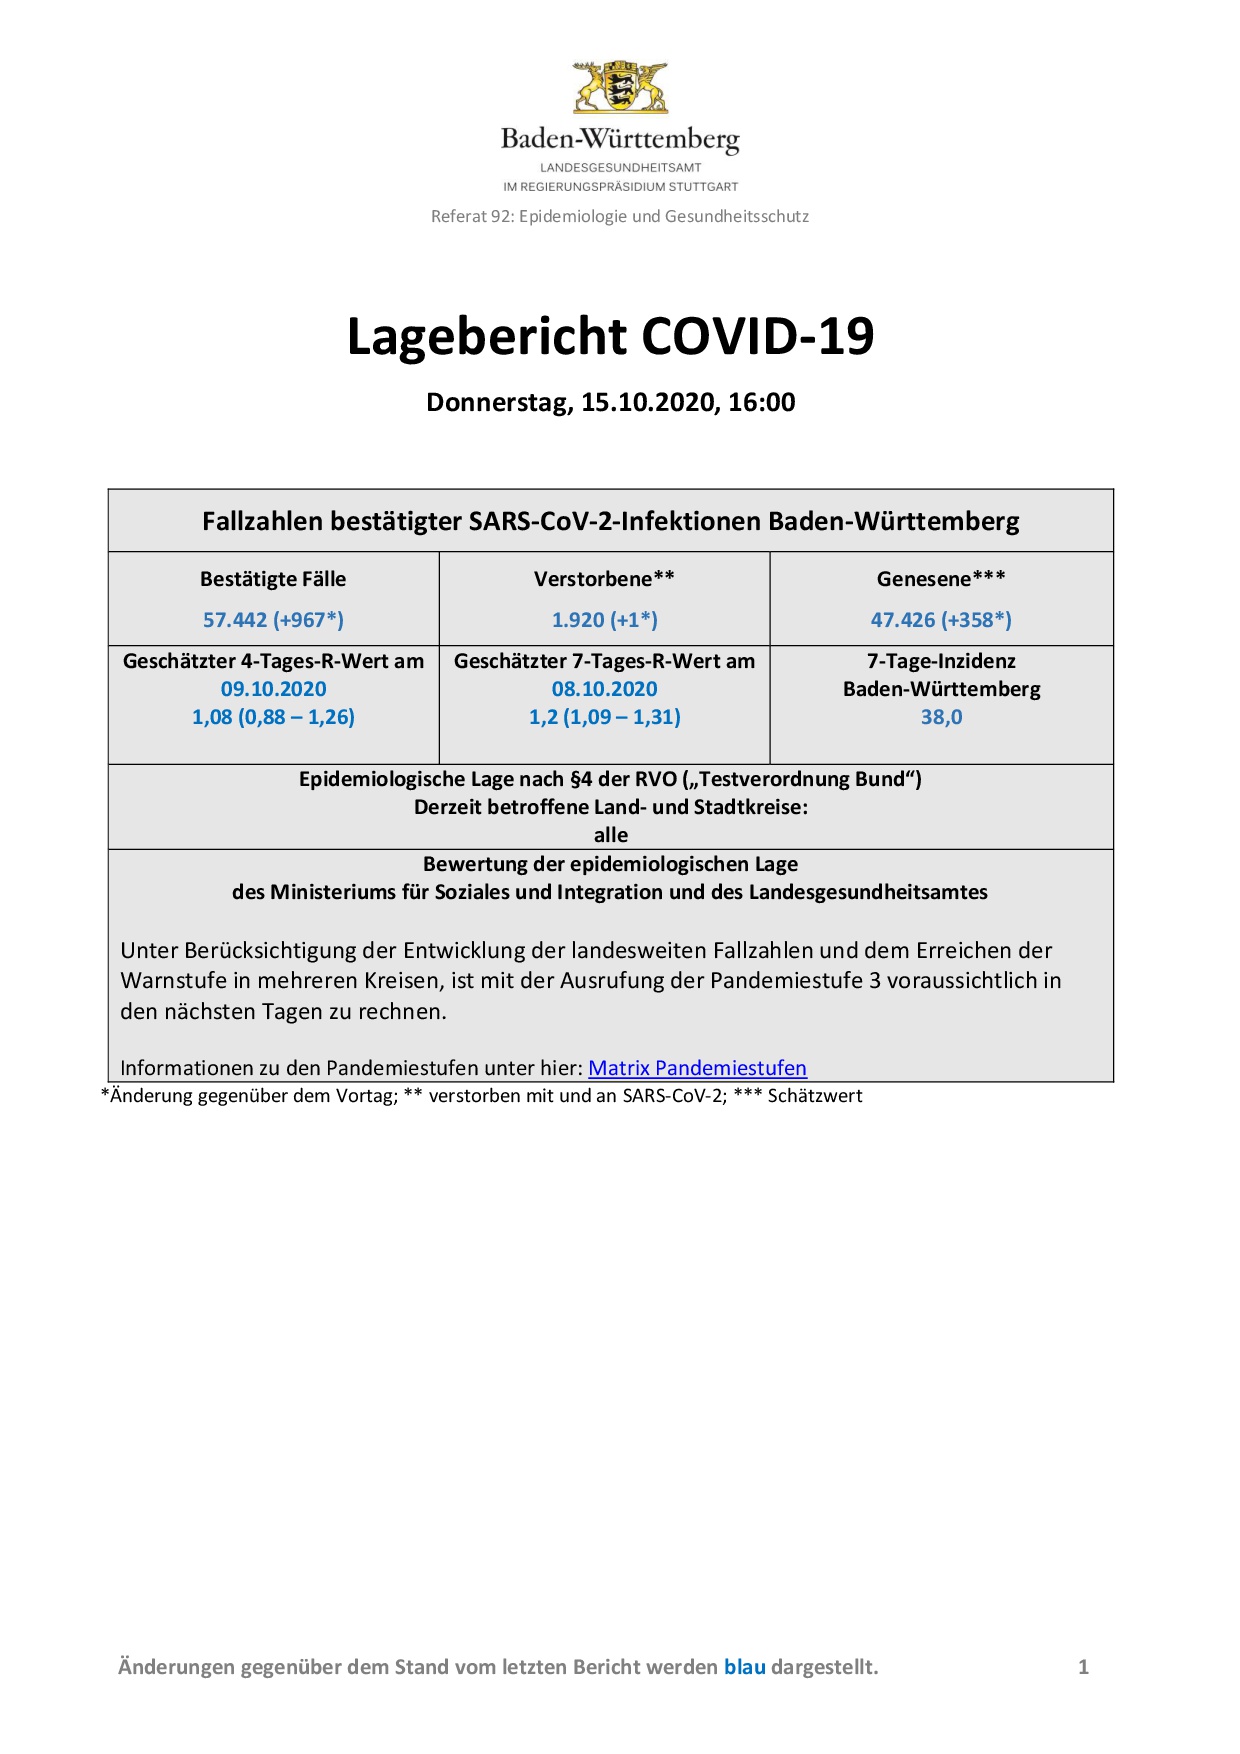 COVID-19 Tagesbericht (15.10.2020) des Landesgesundheitsamts Baden-Württemberg